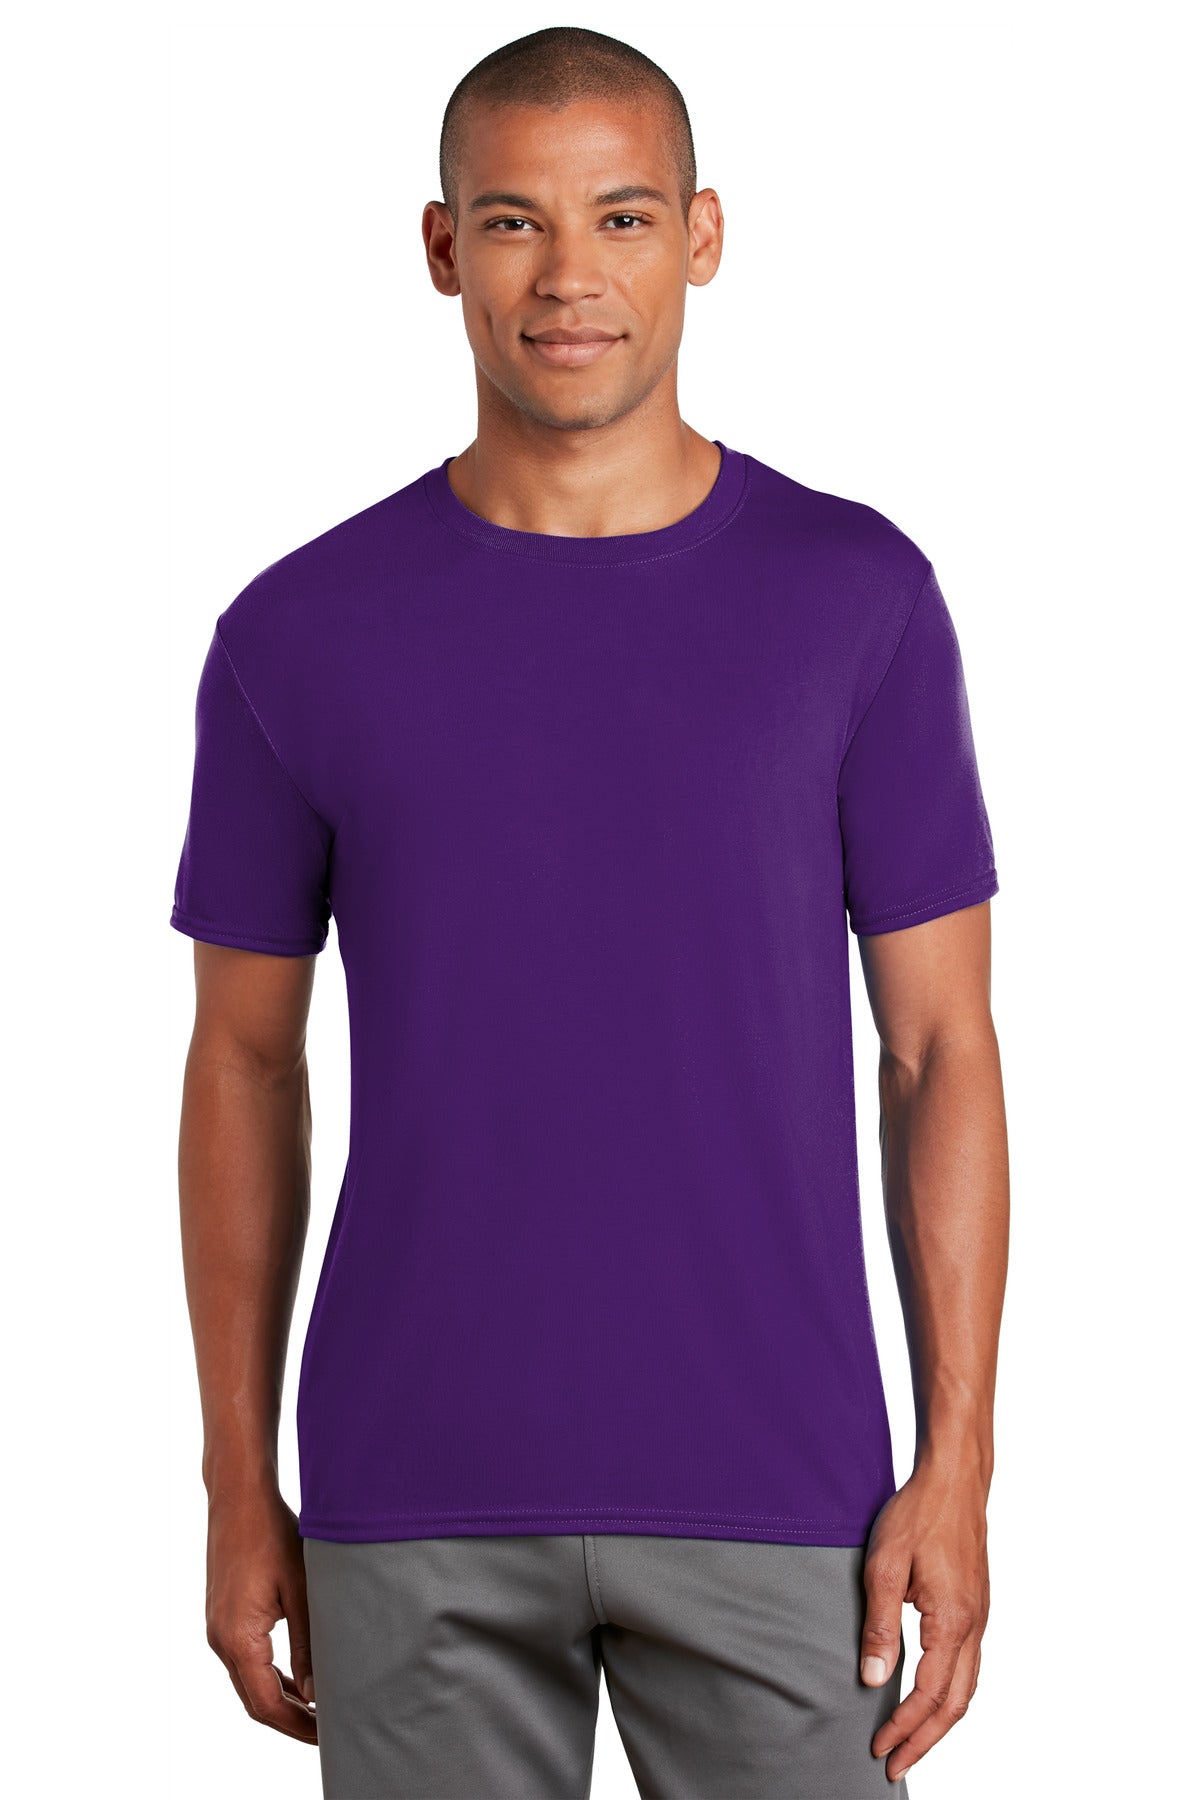 Gildan® Gildan Performance® T-Shirt. 42000